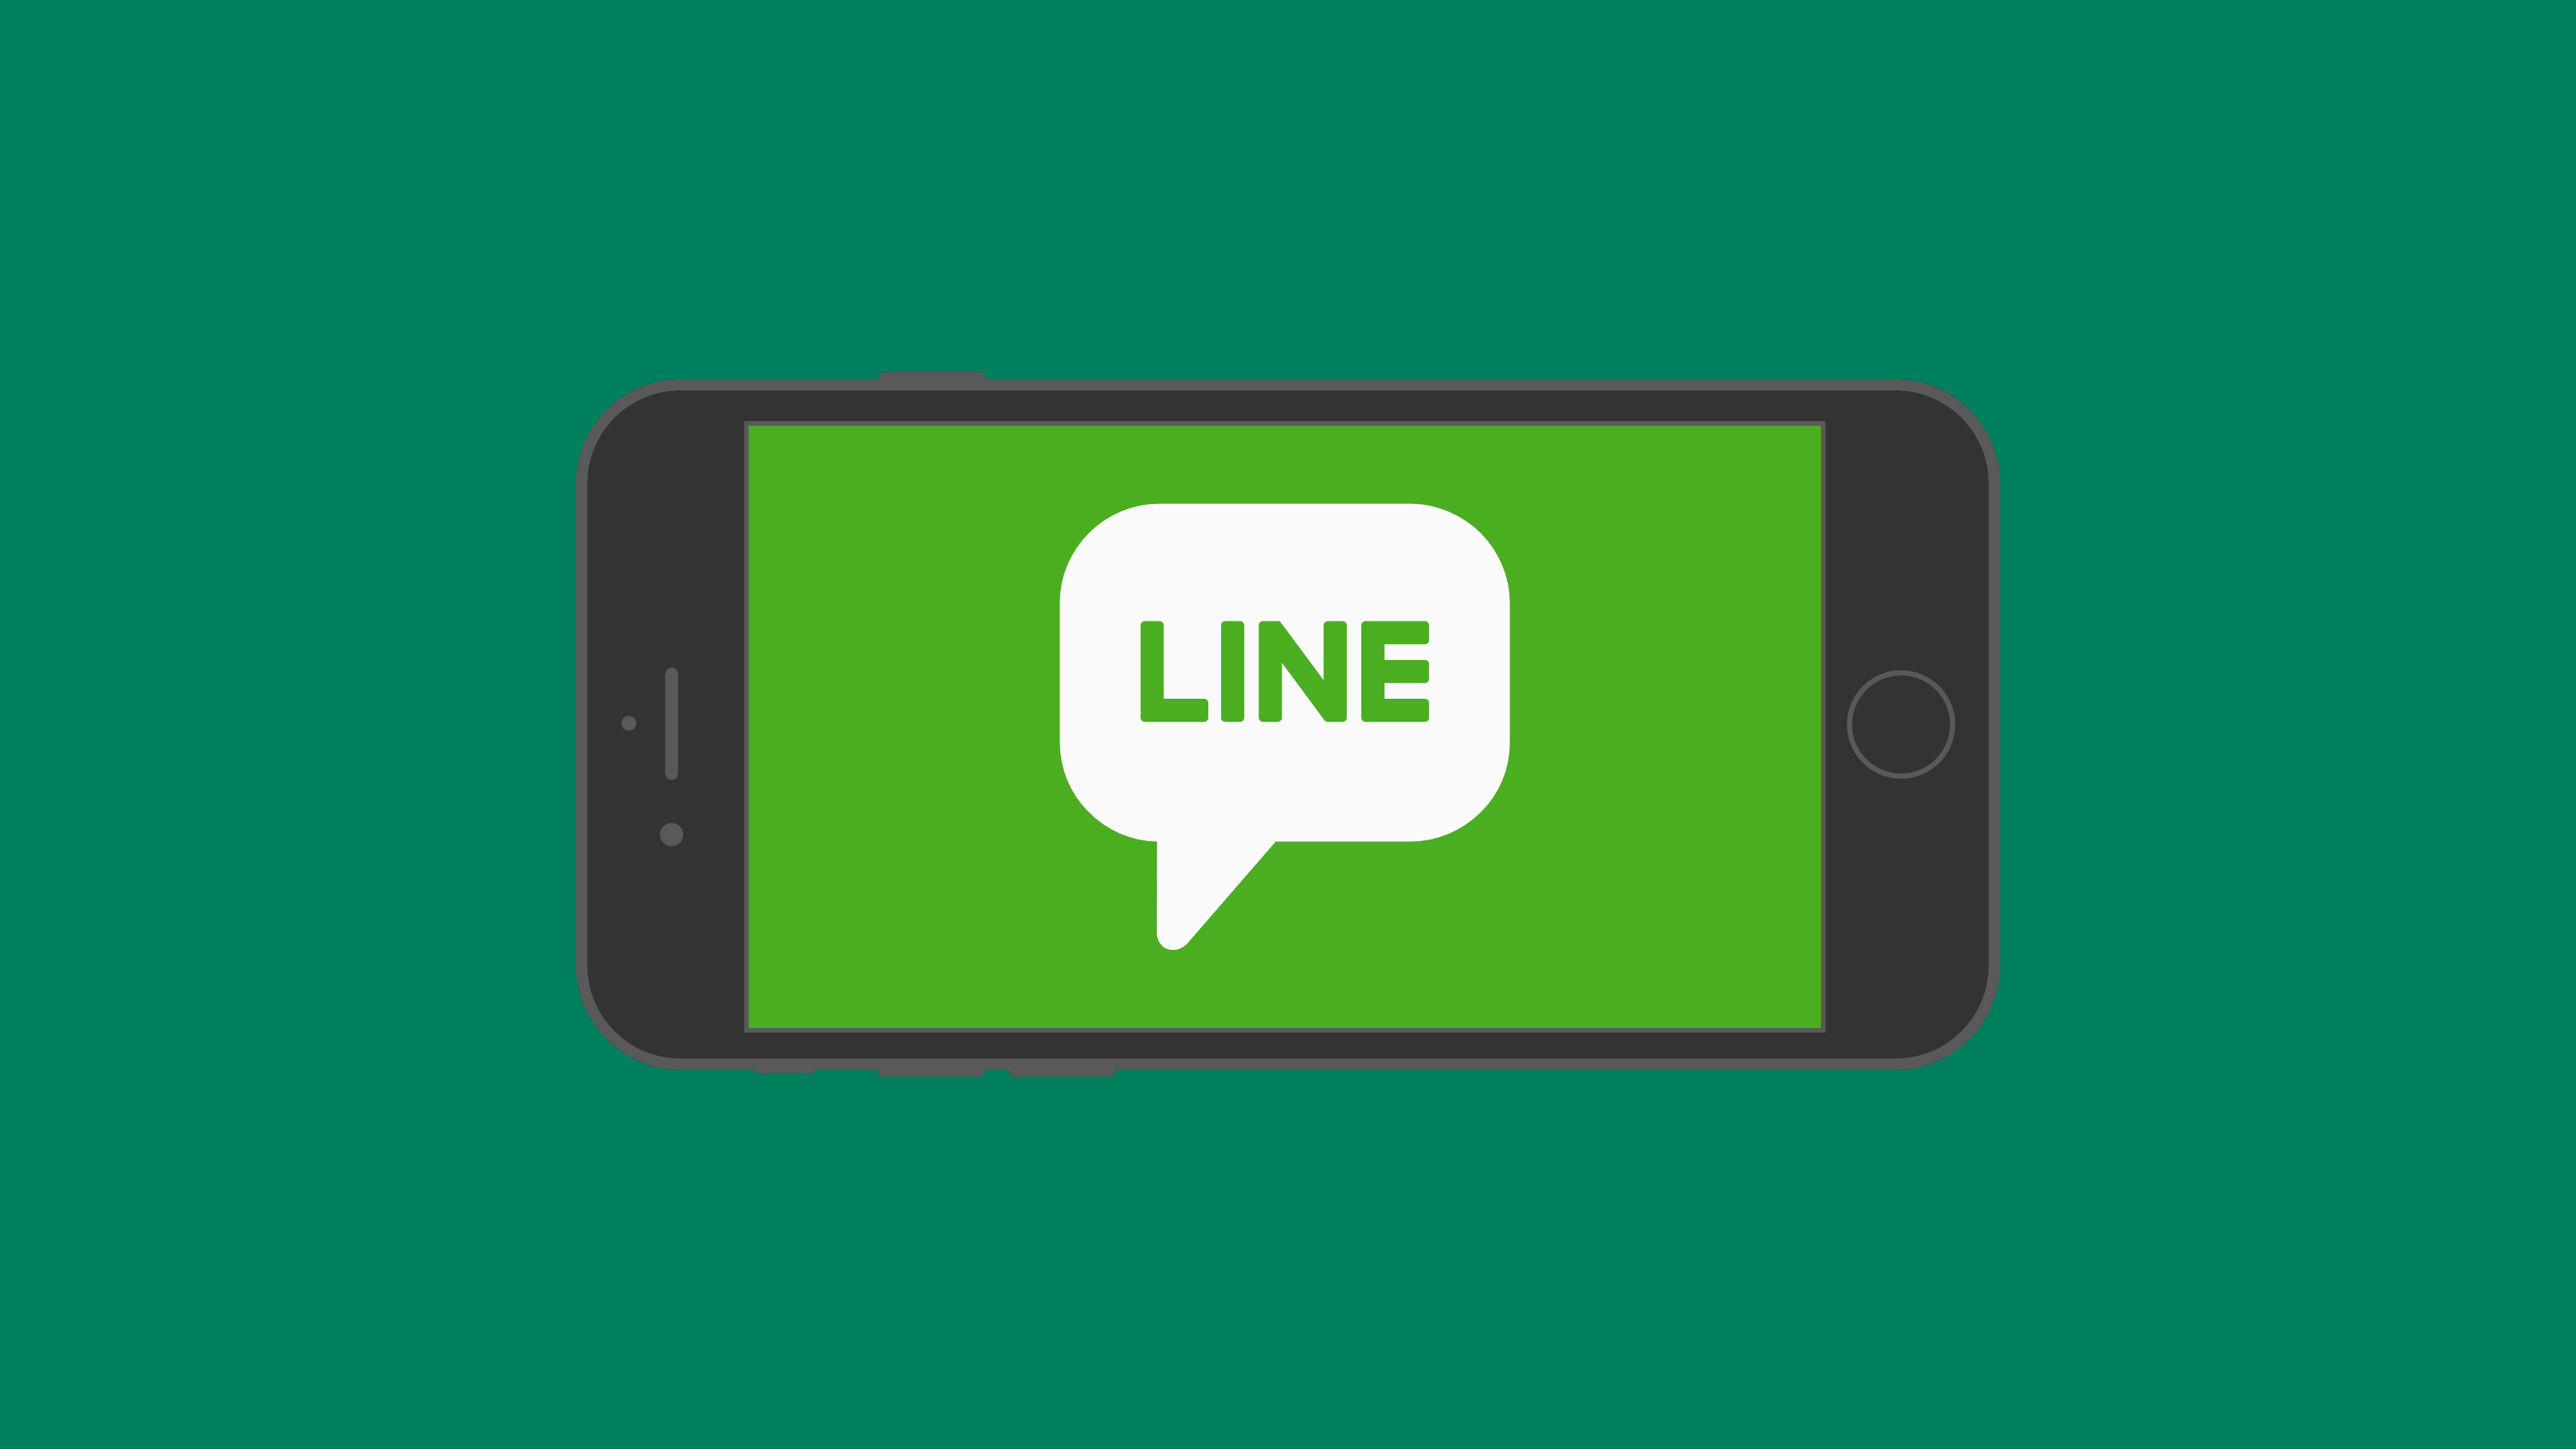 Green Messaging Logo - Messaging Apps & Brands: LINE | MessengerPeople